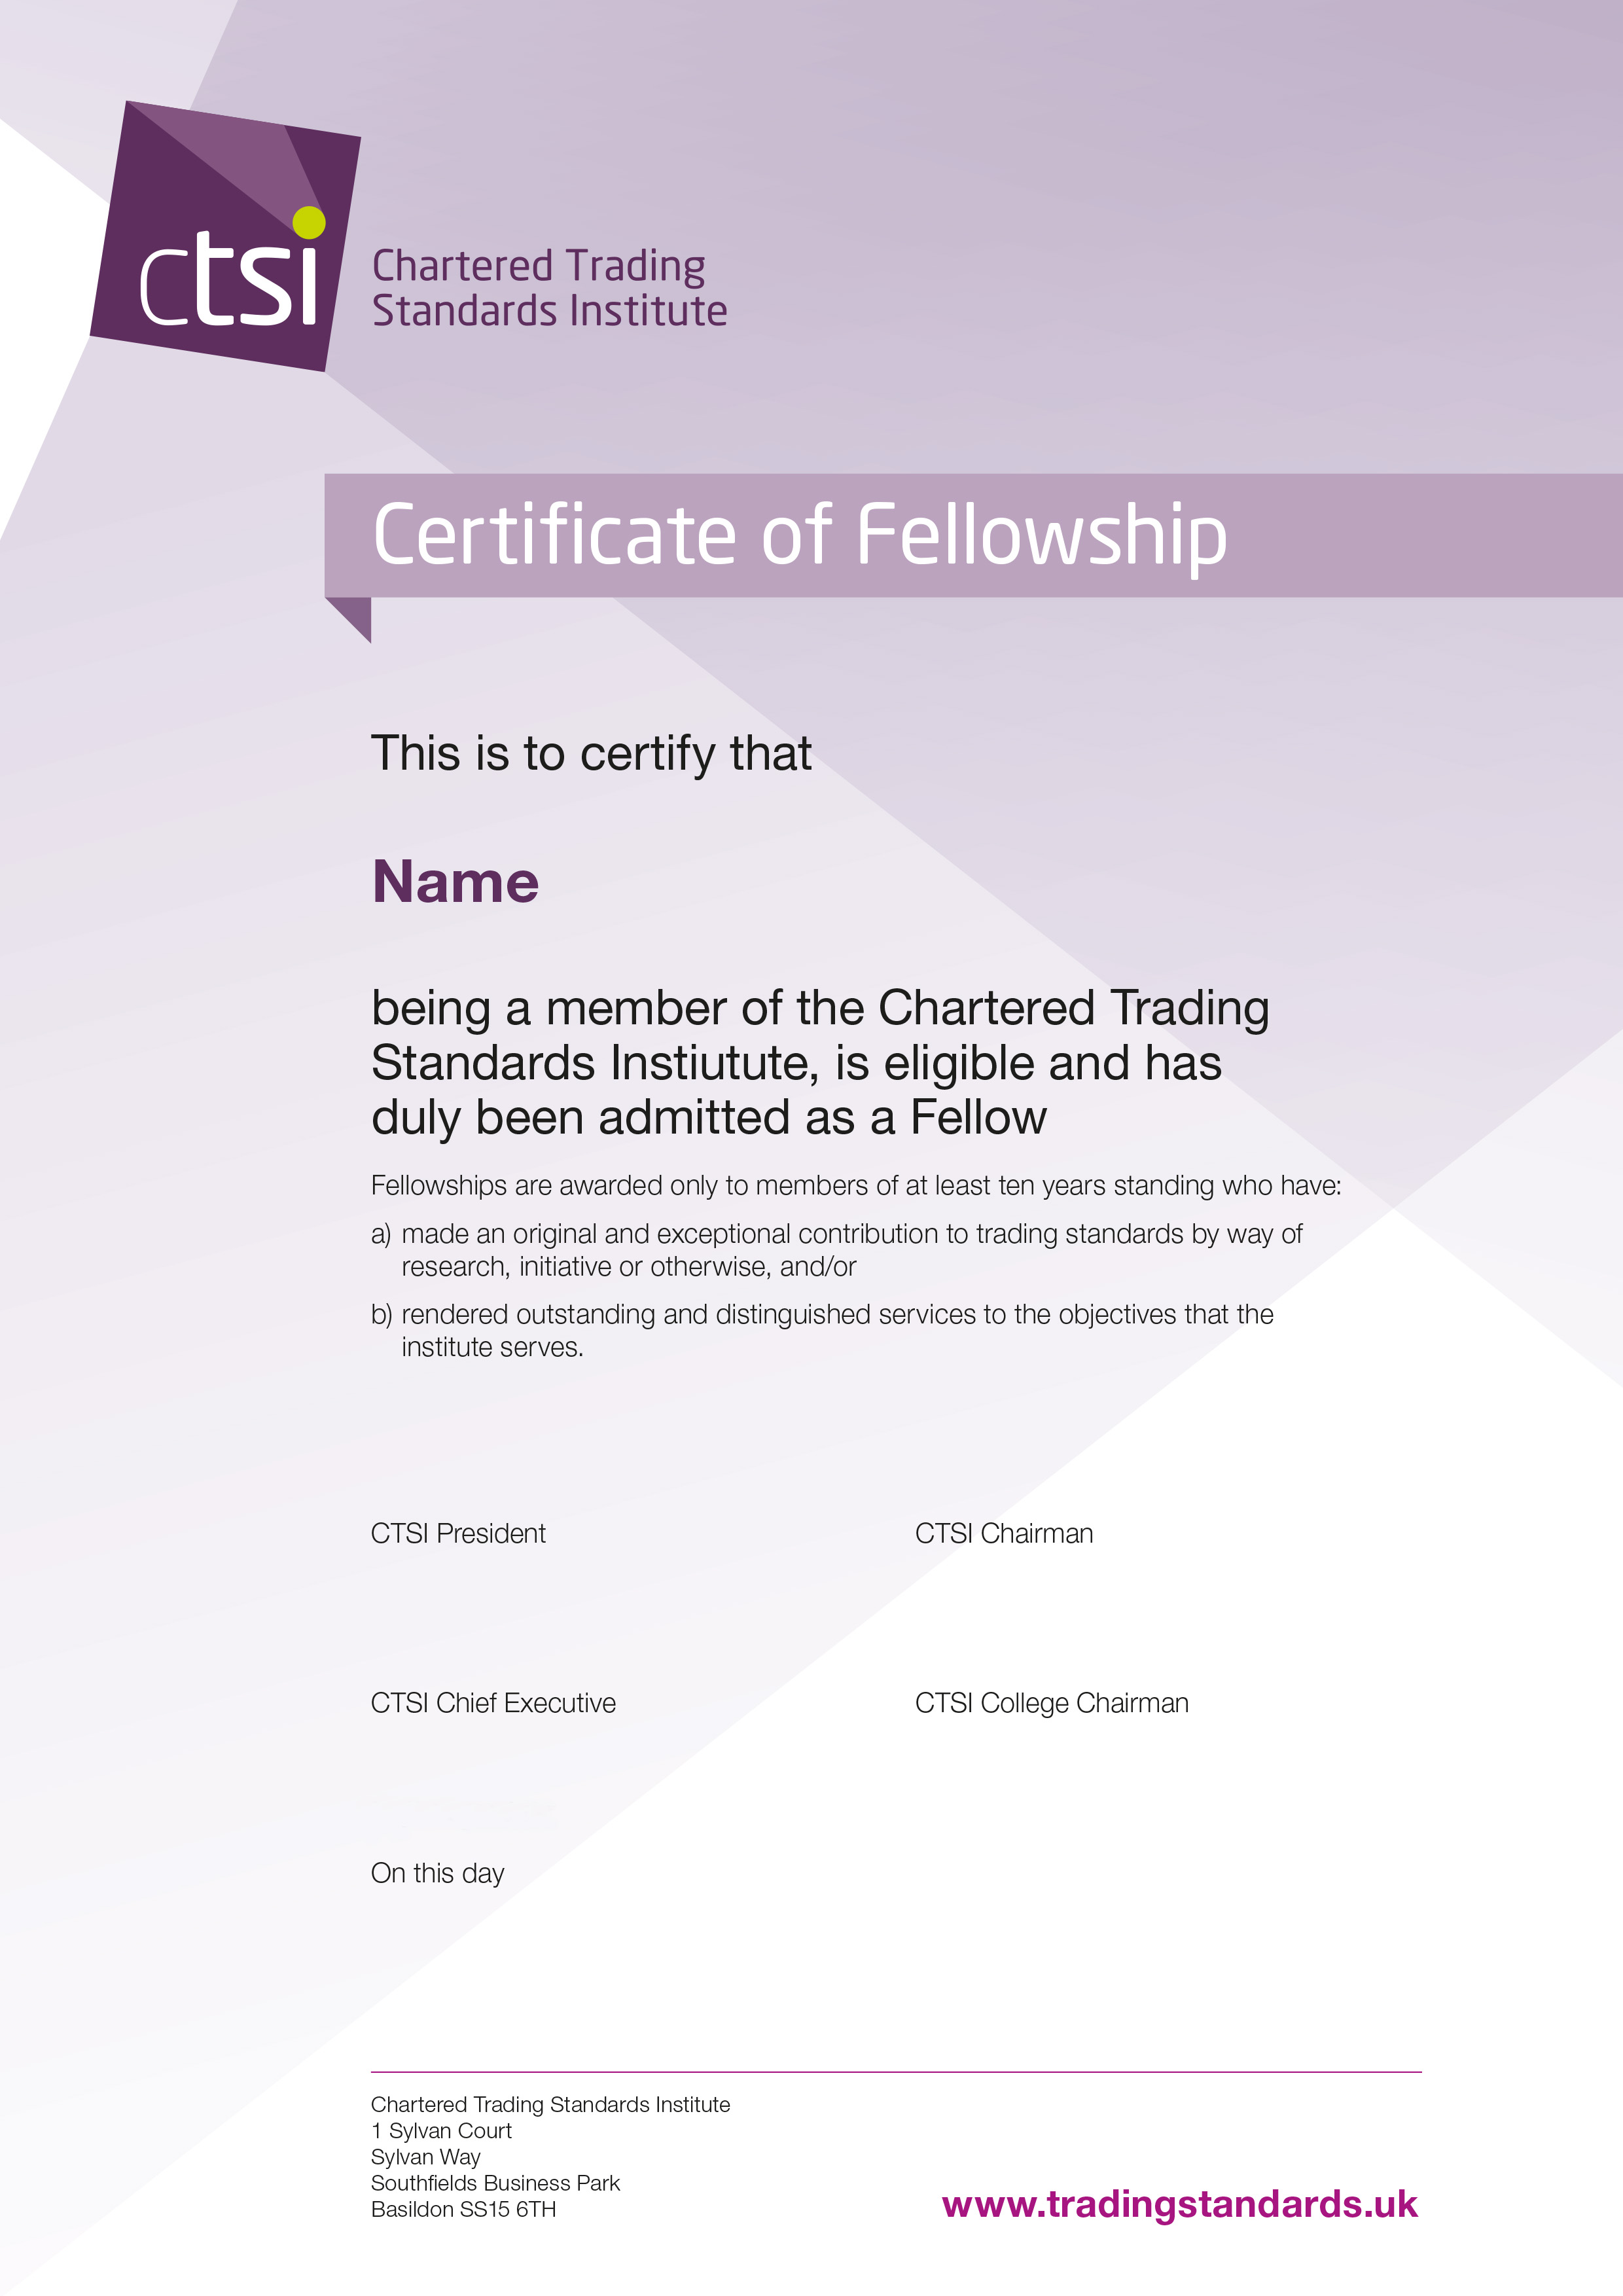 CTSI certificate design